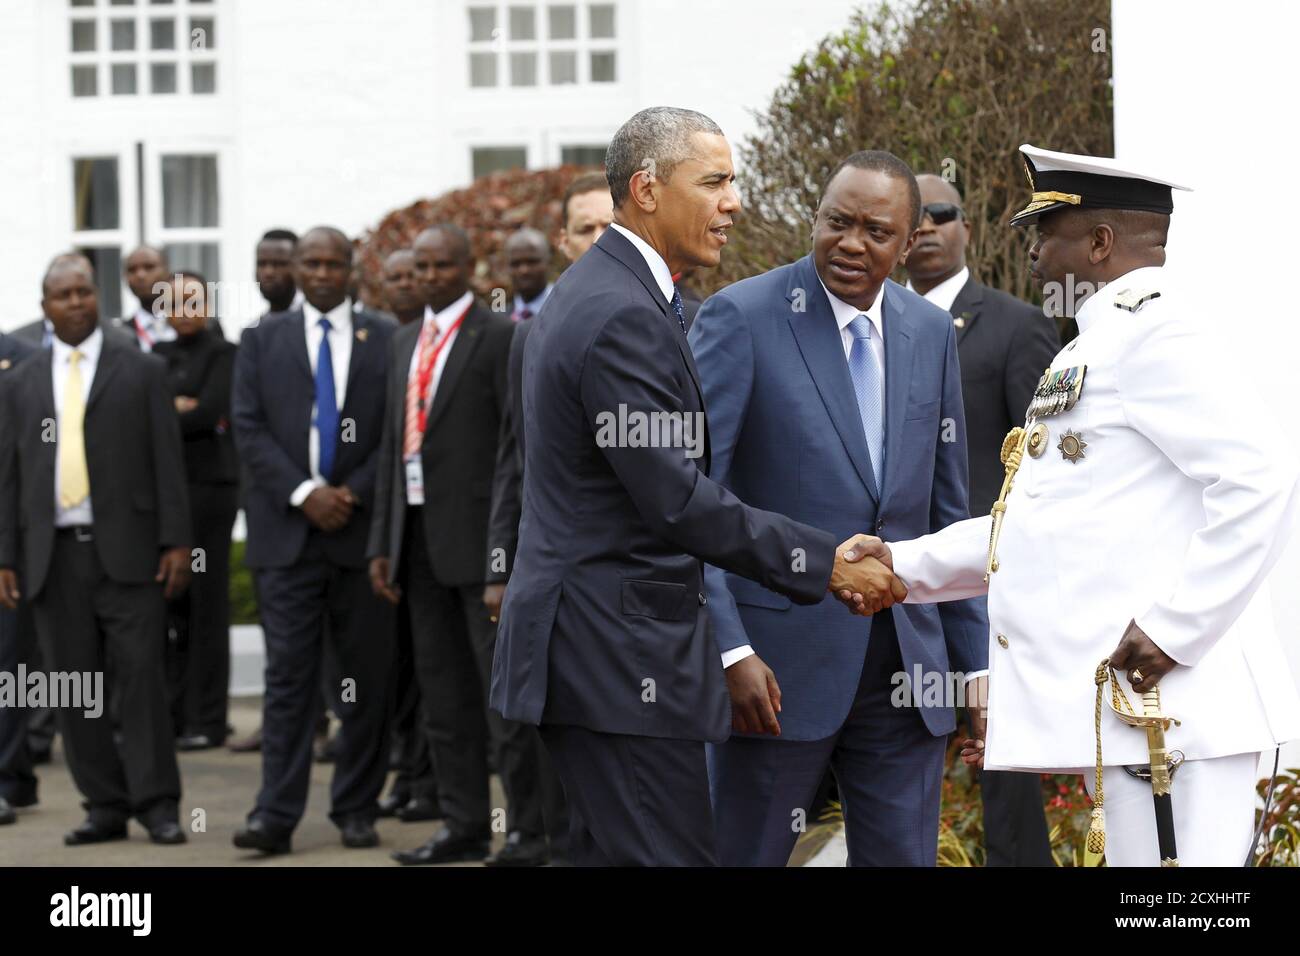 U.S. President Barack Obama (L) shake hands with Kenya's Chief of Defence Forces Samson Mwathathe (R), next to Kenya's President Uhuru Kenyatta (2nd R), as he arrives to visit at the State House in Kenya's capital Nairobi, July 25, 2015. REUTERS/Thomas Mukoya Stock Photo